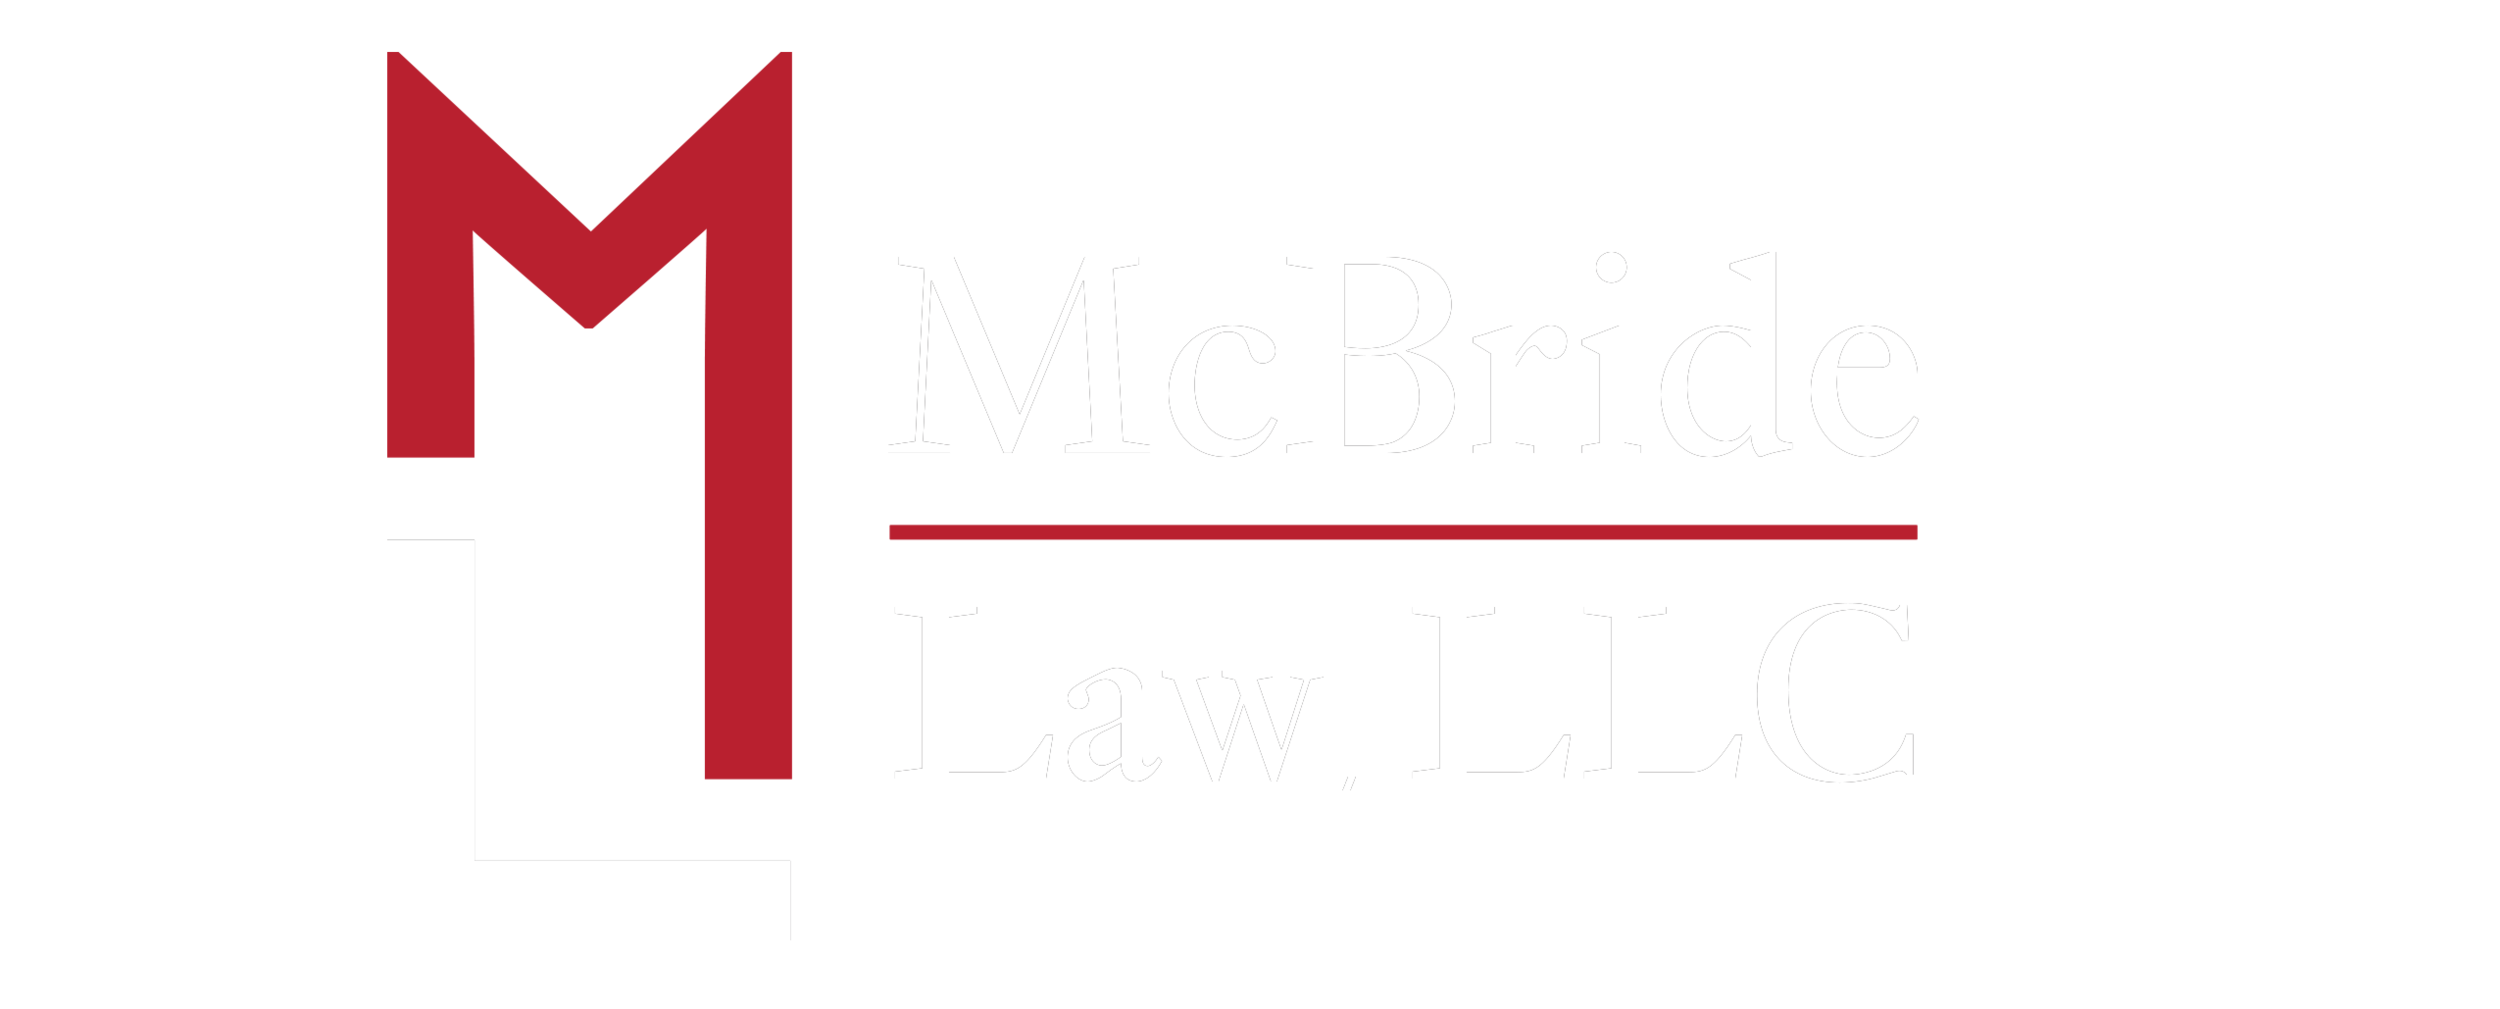 McBride Law, LLC